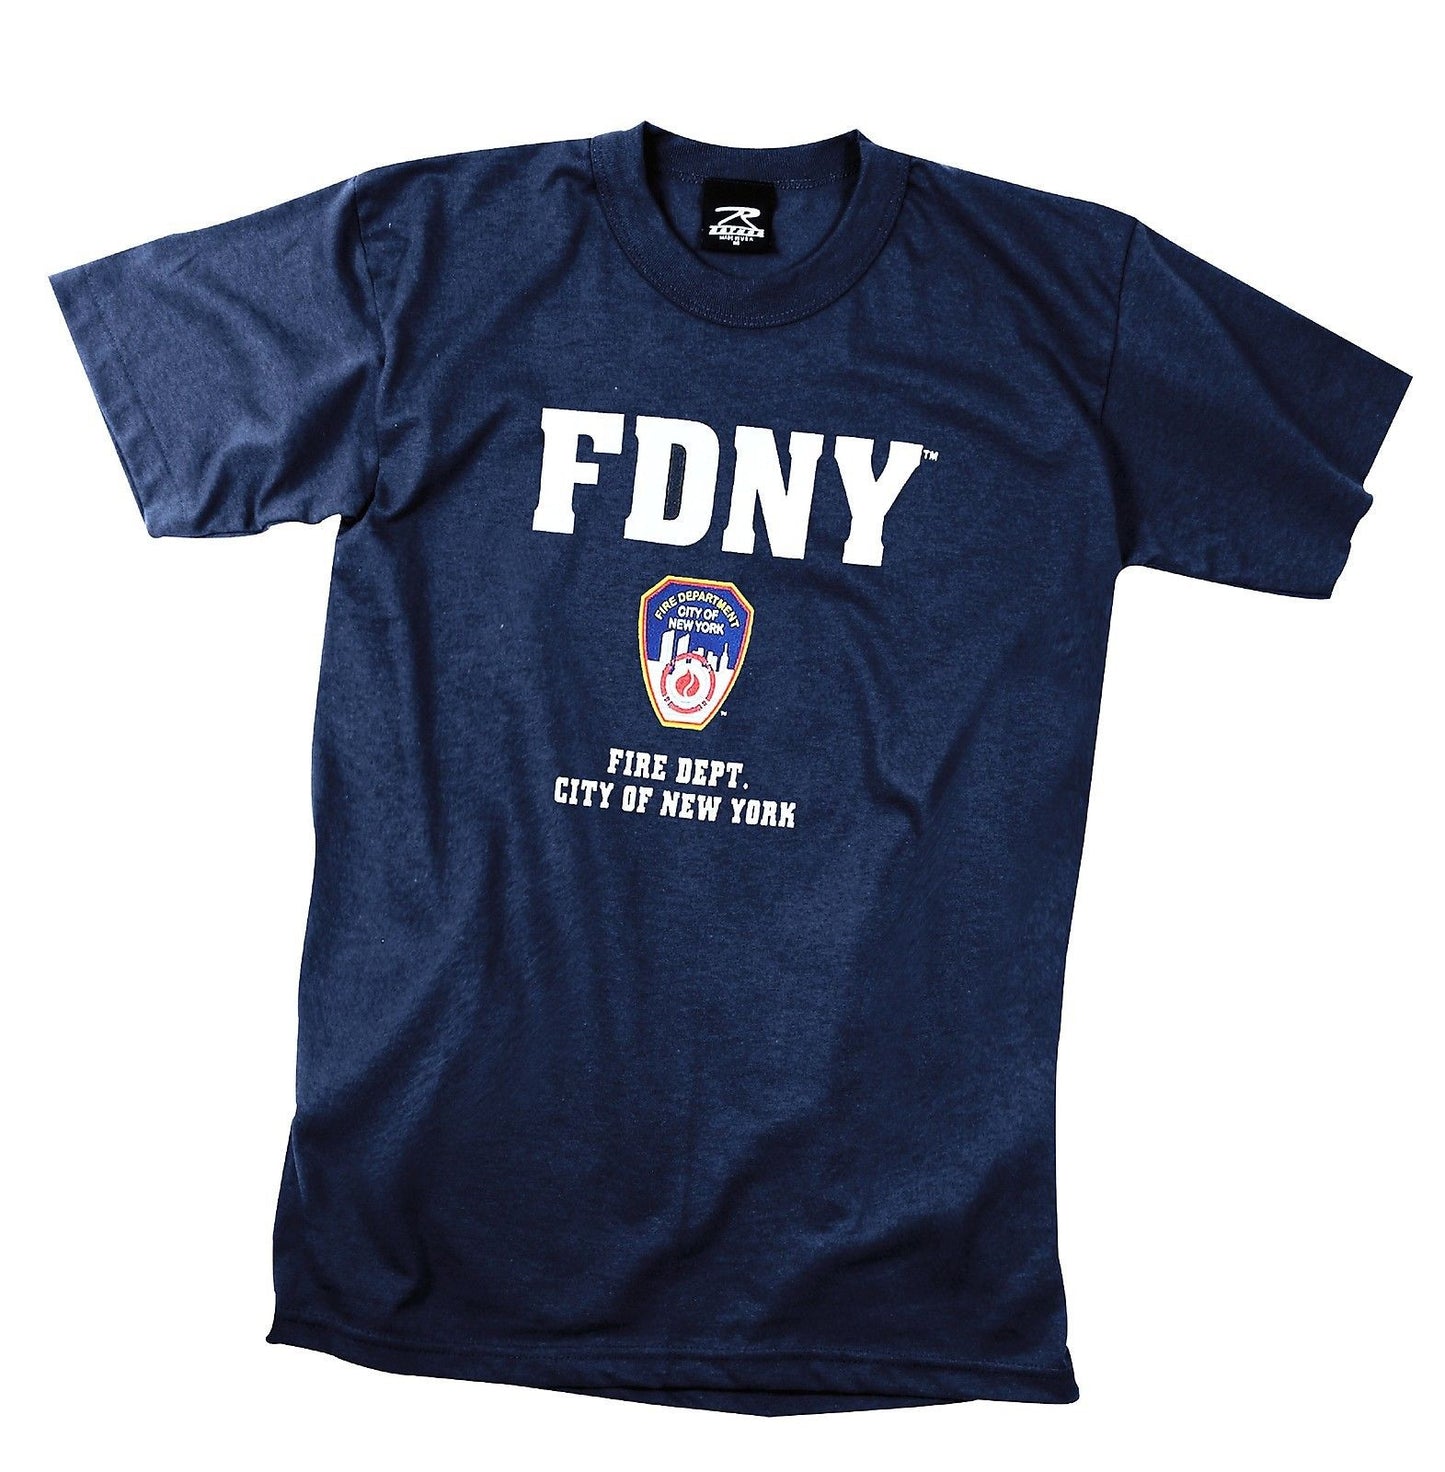 Officially Licensed Navy Blue FDNY Fire Dept T-Shirt Tee Shirt Undershirt